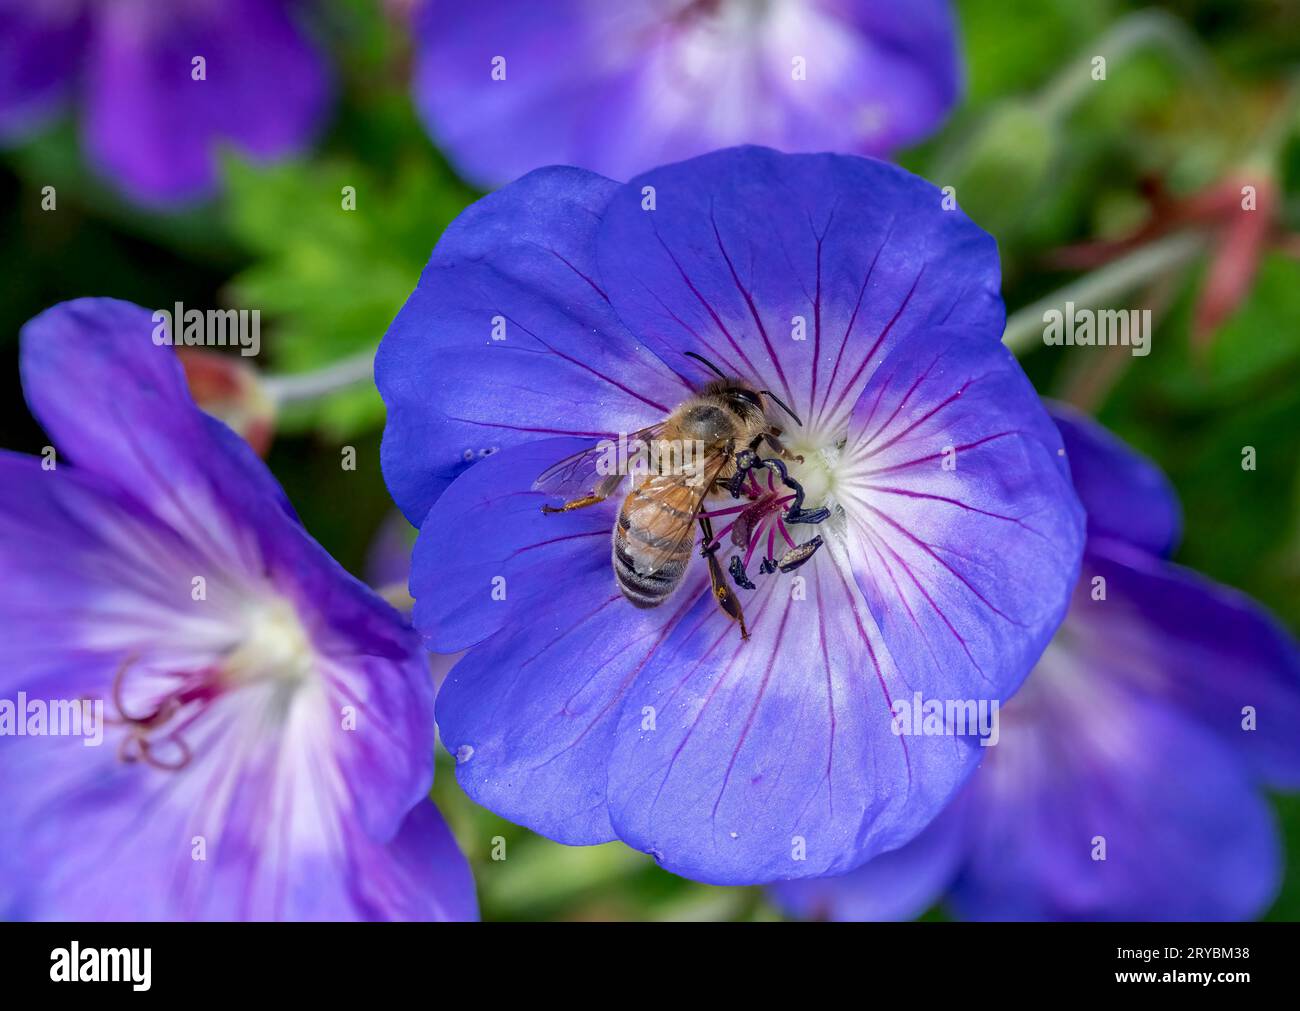 A Honeybee pollenating a wild Geranium flower, (also known as Cranesbill) Stock Photo